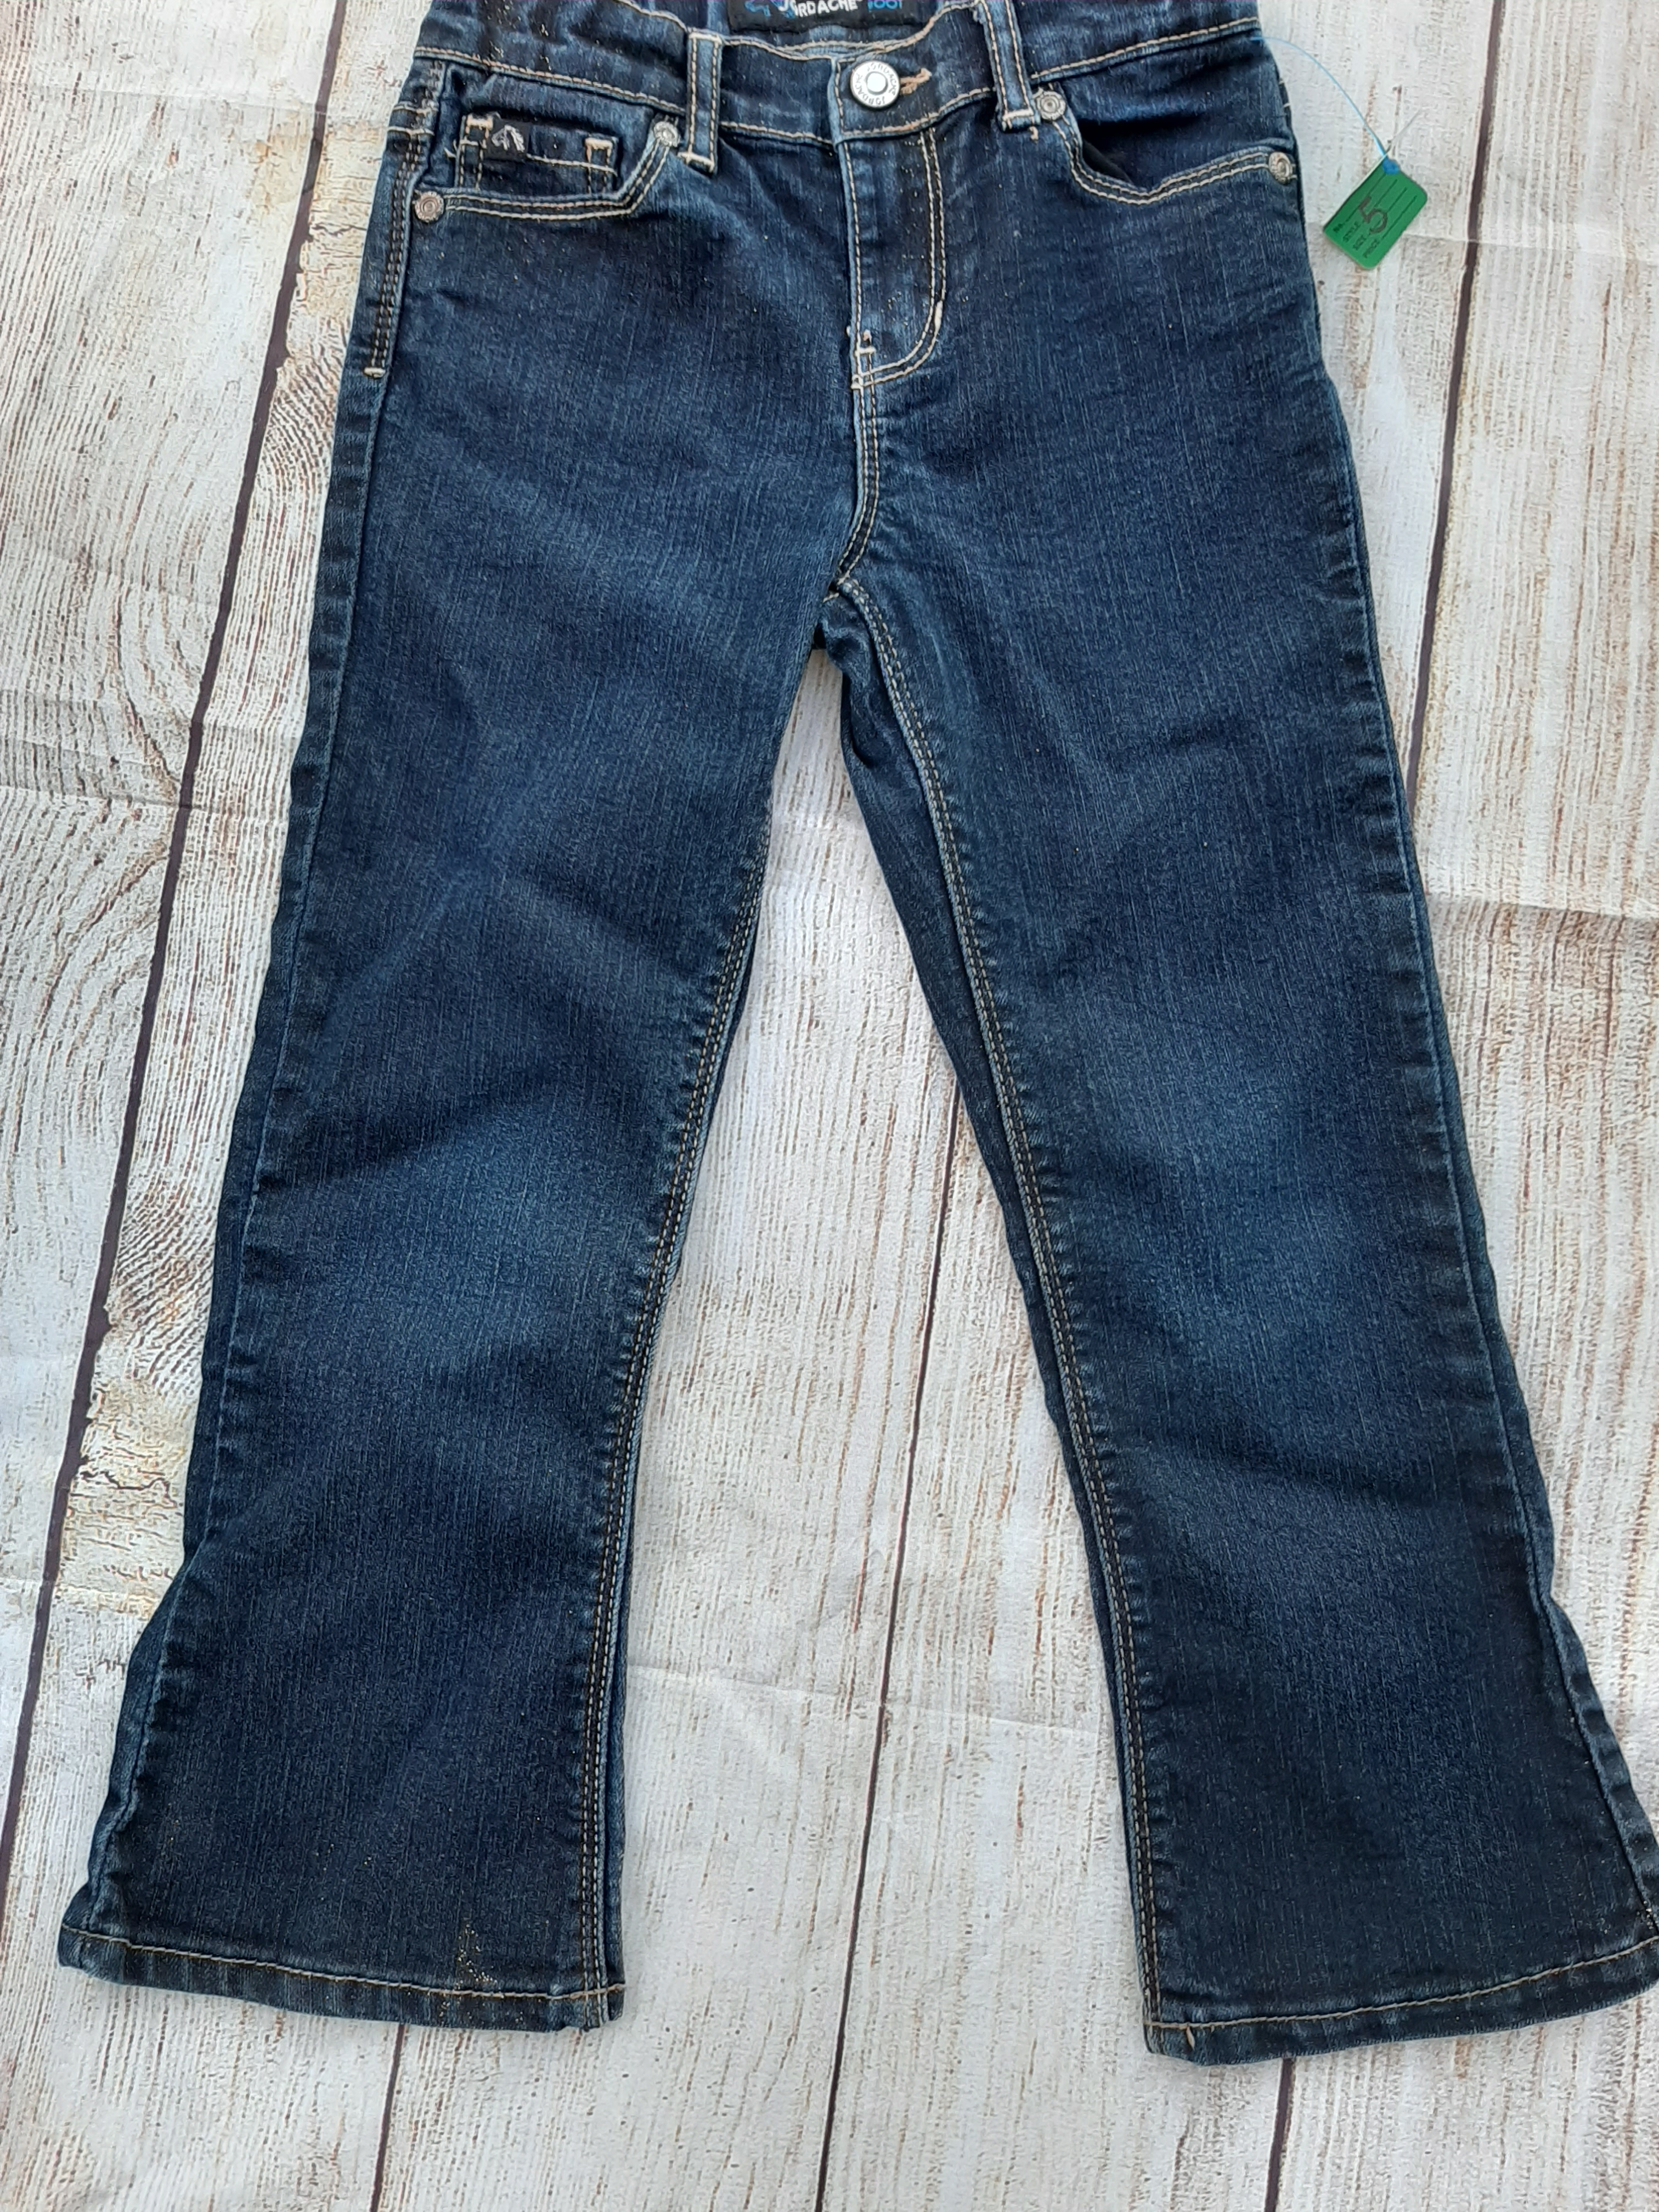 Jordache Girls bootcut denim jeans size 5T